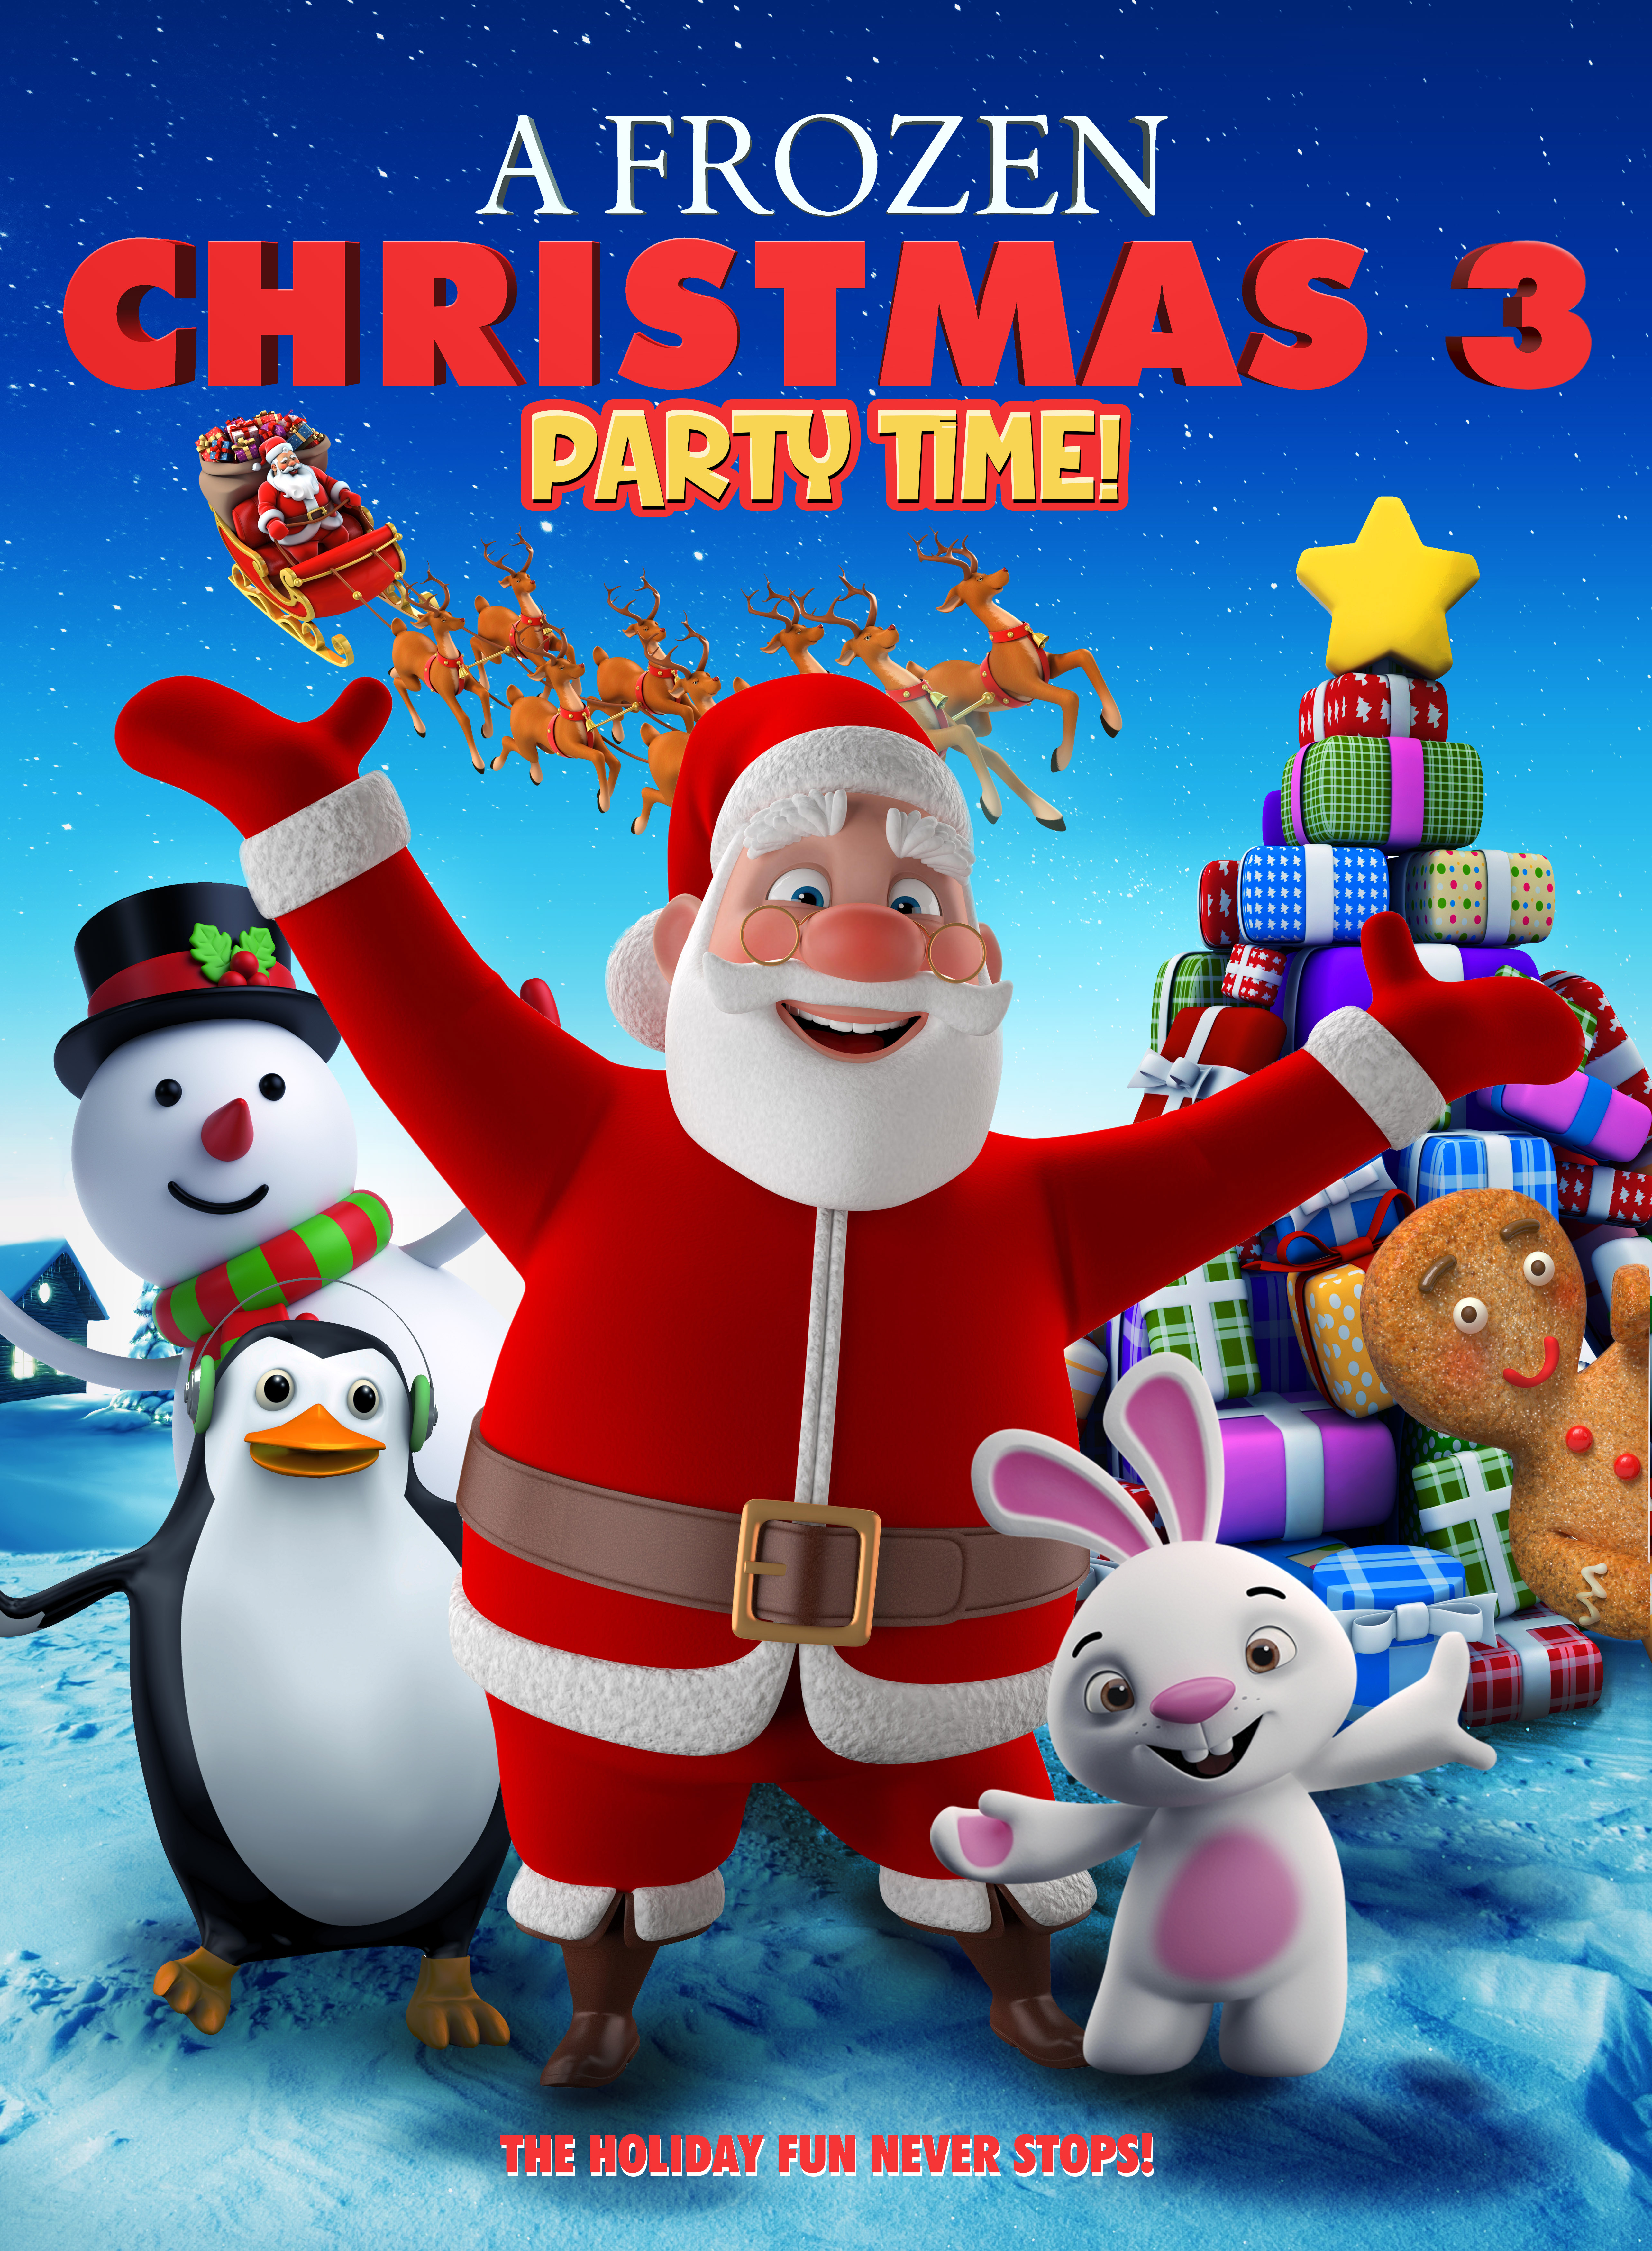 Nonton film A Frozen Christmas 3 layarkaca21 indoxx1 ganool online streaming terbaru